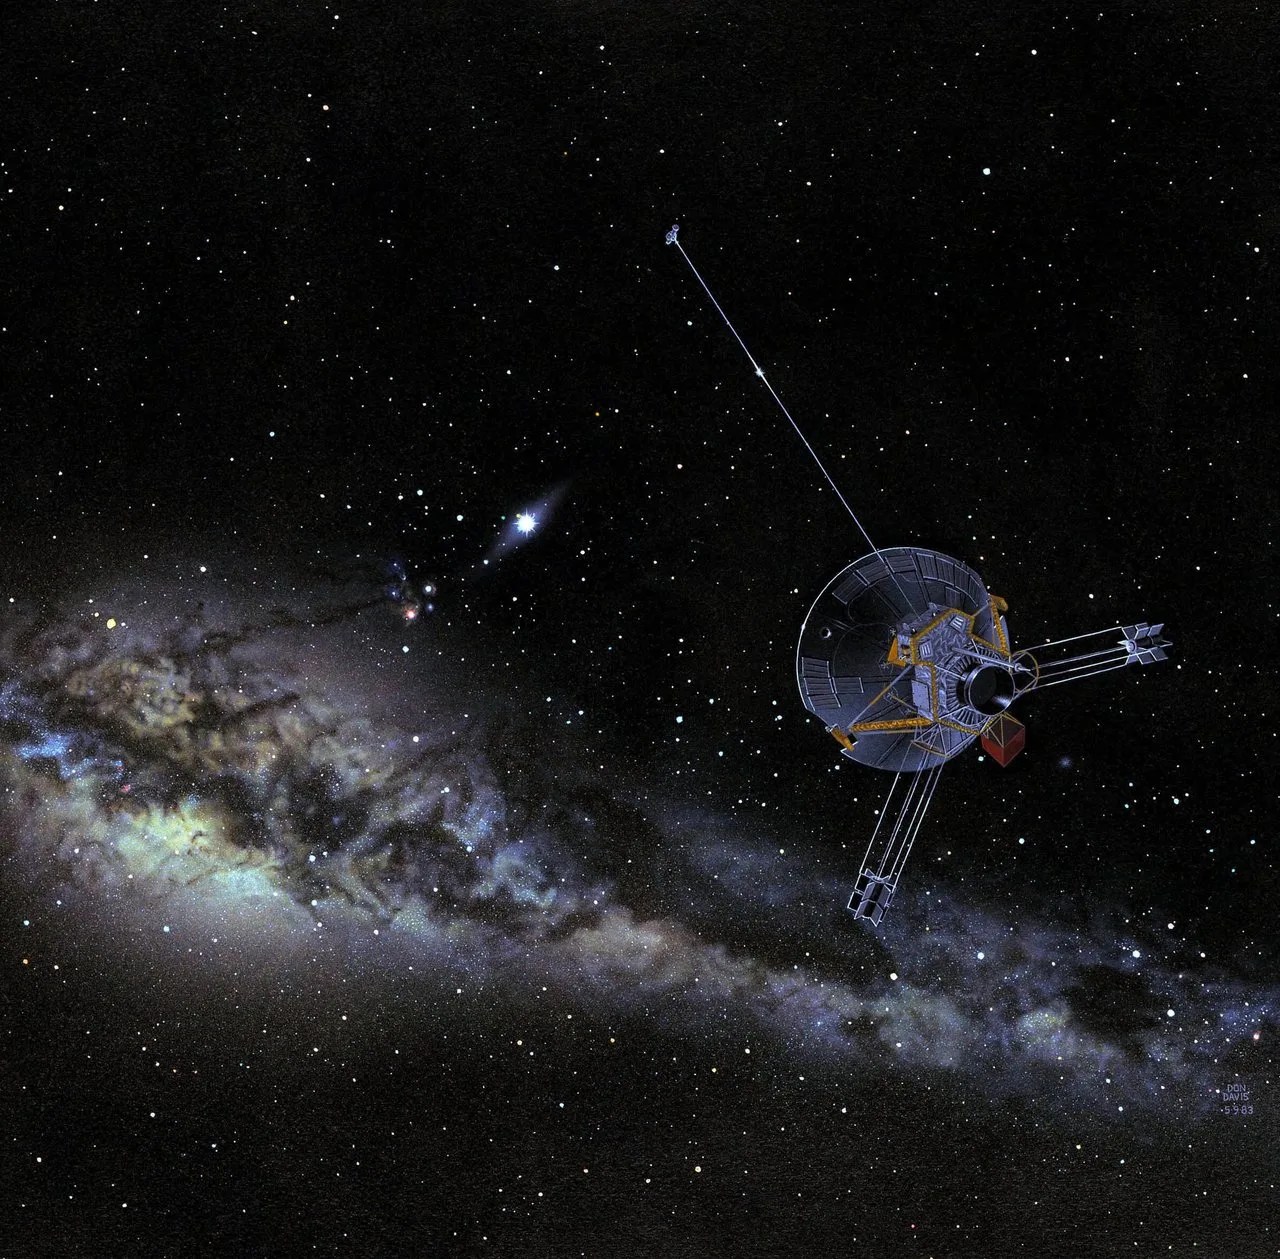 OTD In Space – January 22: Pioneer 10 Beams Last Signal To Earth